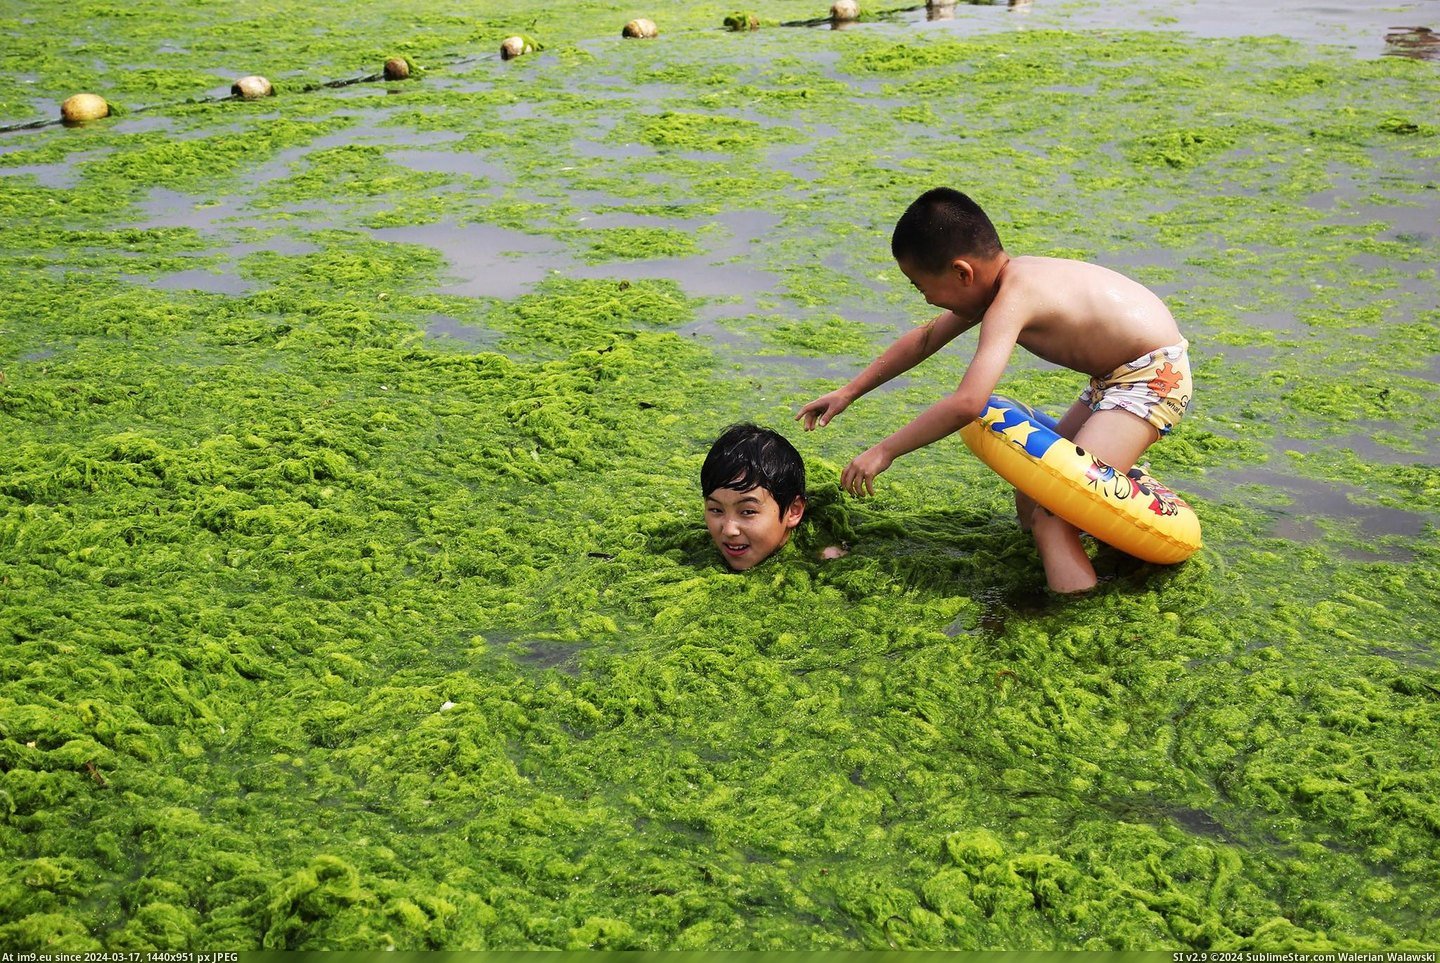 #Wtf #Beach #Covered #Algae #Qingdao #Green #China [Wtf] Beach covered by green algae in Qingdao, China 2 Pic. (Image of album My r/WTF favs))